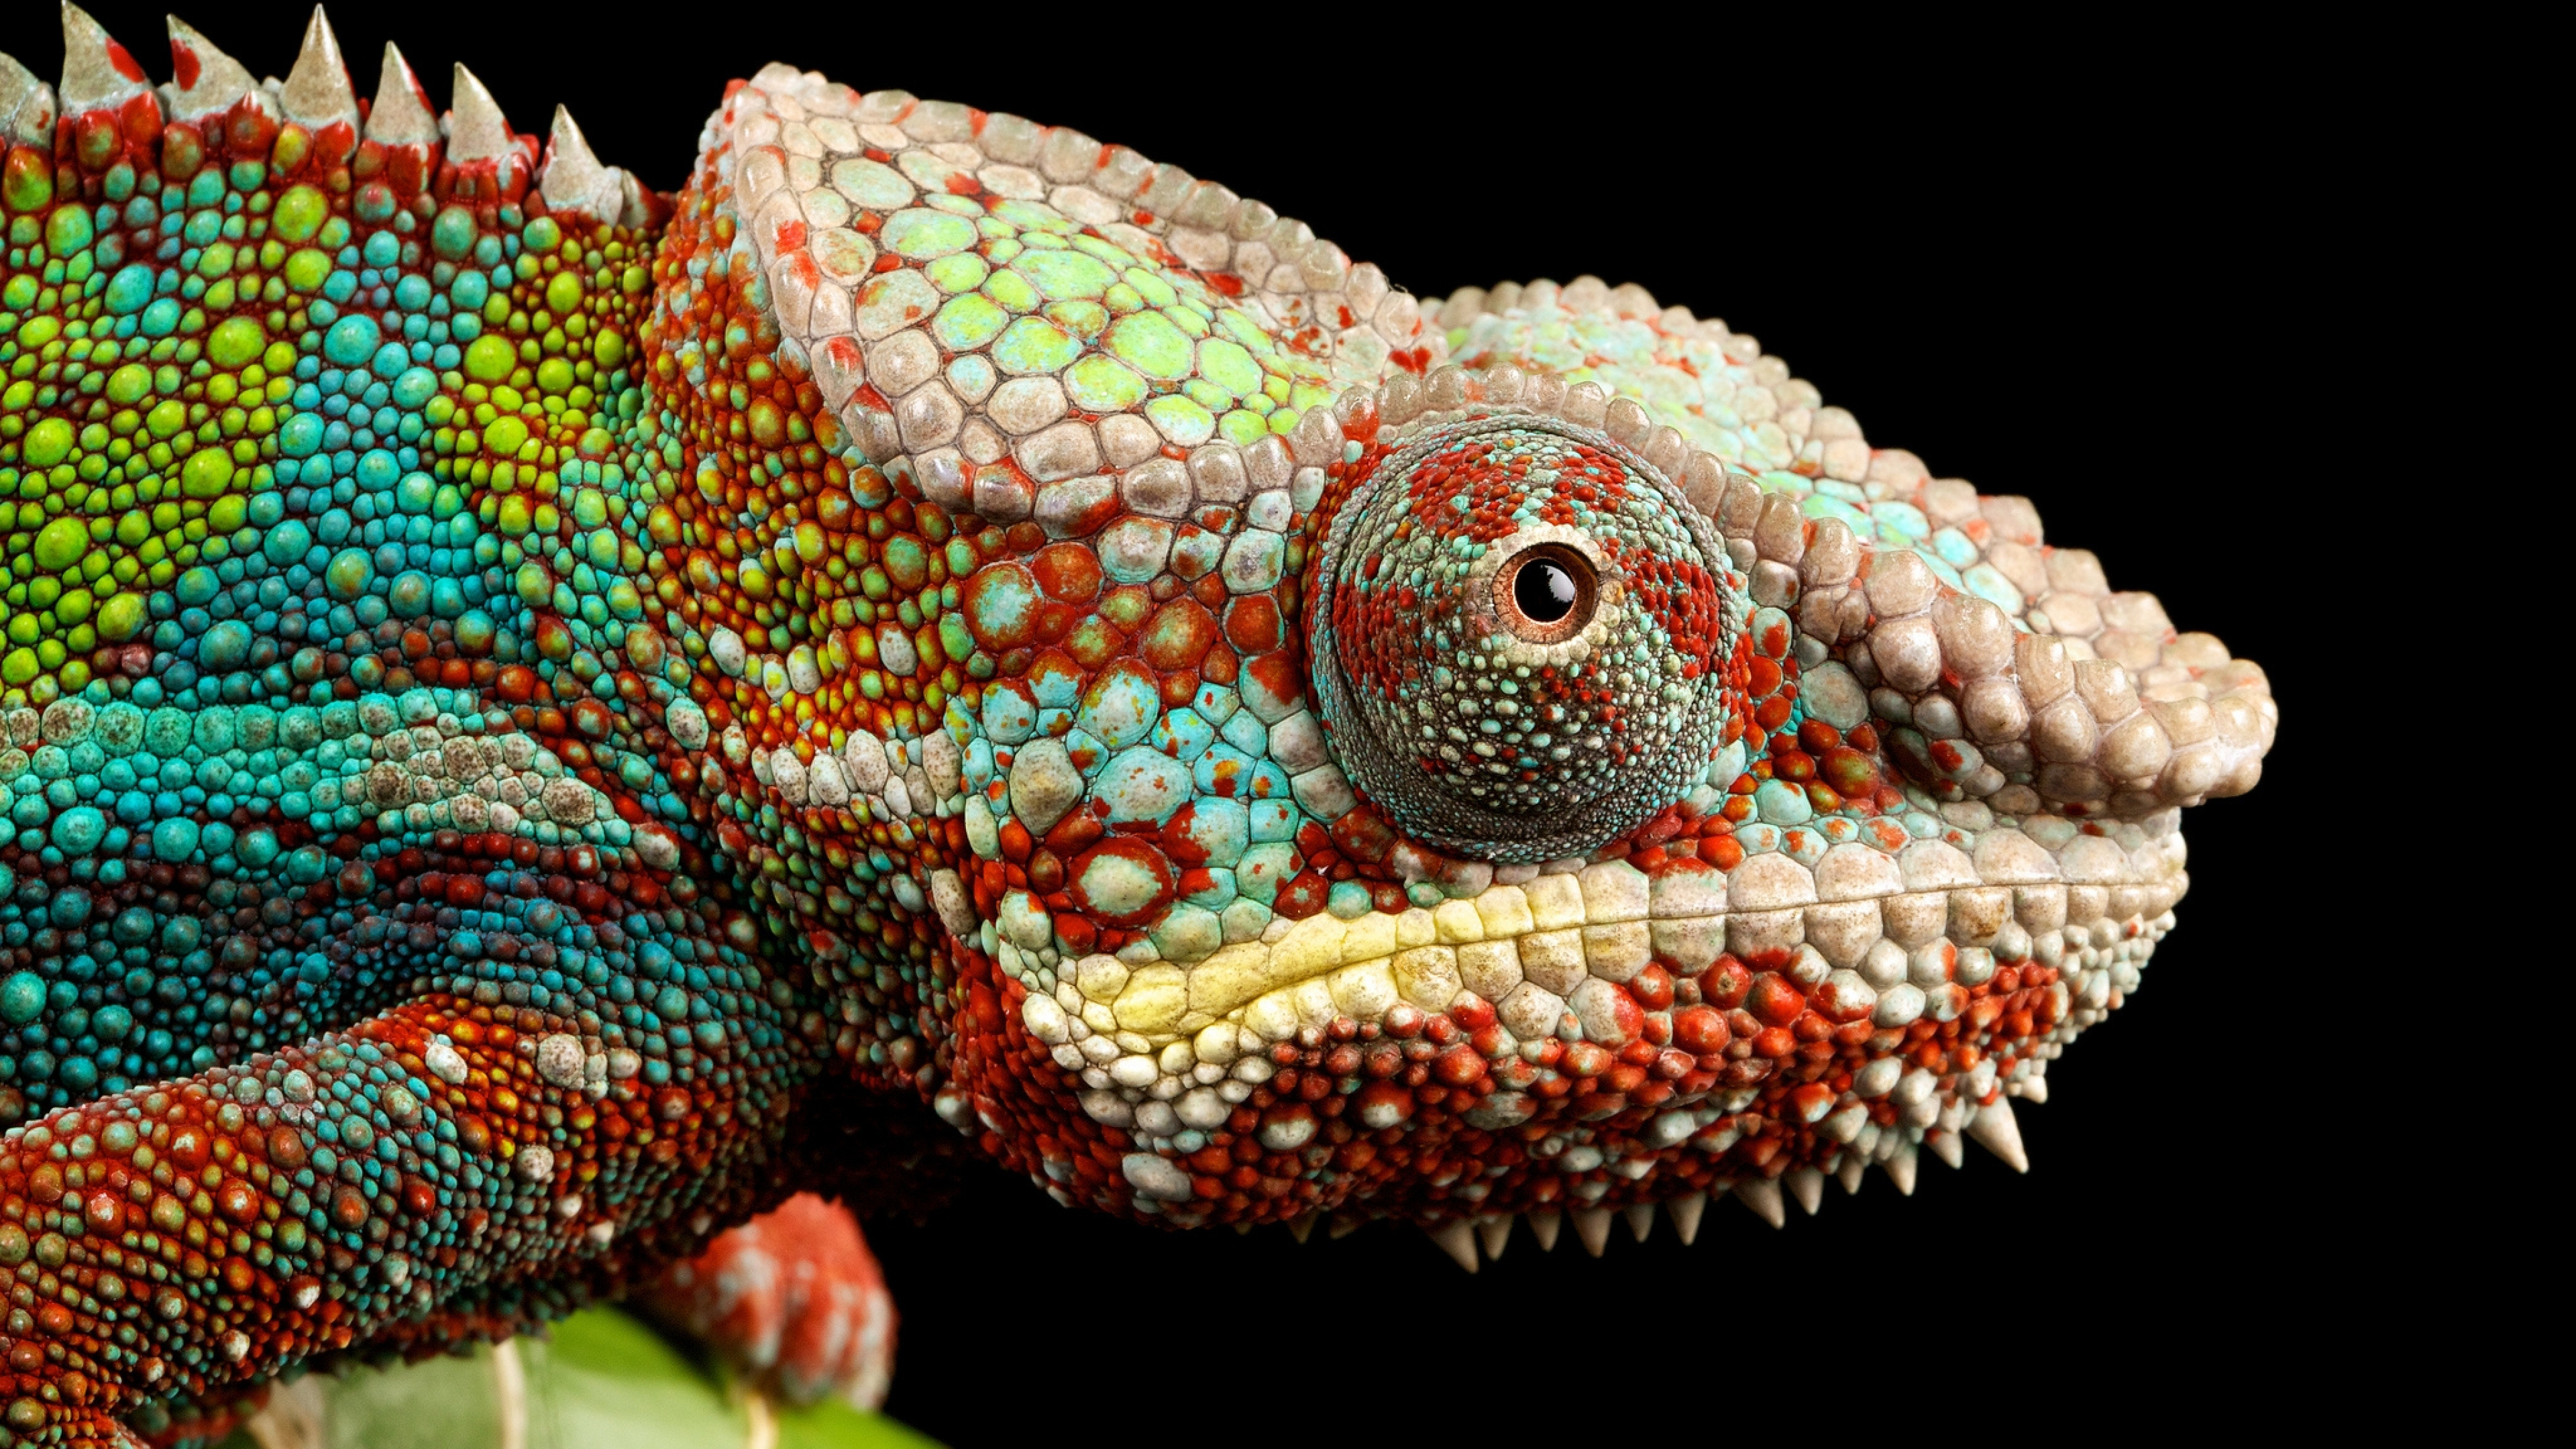 Chameleon lizard, Multicolor scales, Close-up view, Macro photography, 3840x2160 4K Desktop